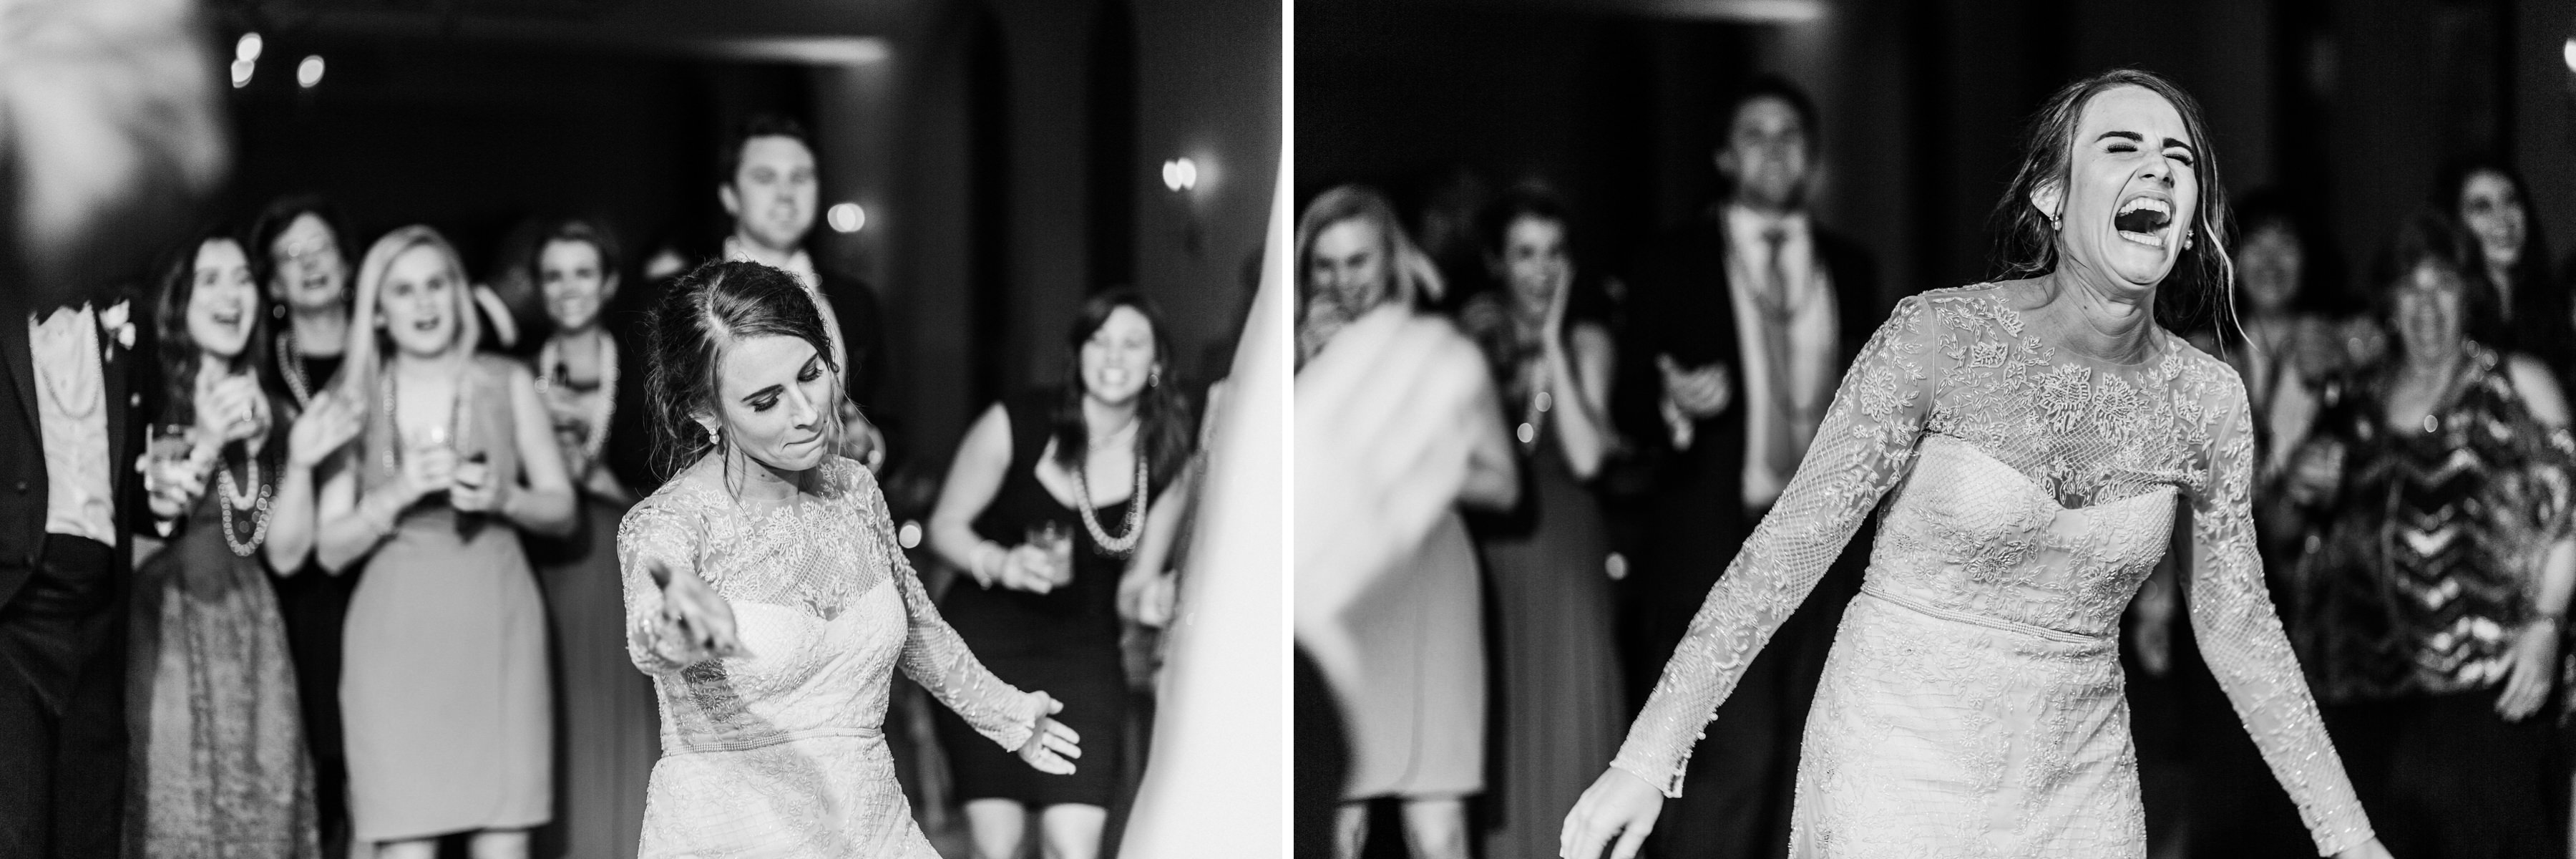 MULLET_WEDDING_NEW_ORLEANS_LOUISIANA_WEDDING_PHOTOGRAPHY_186